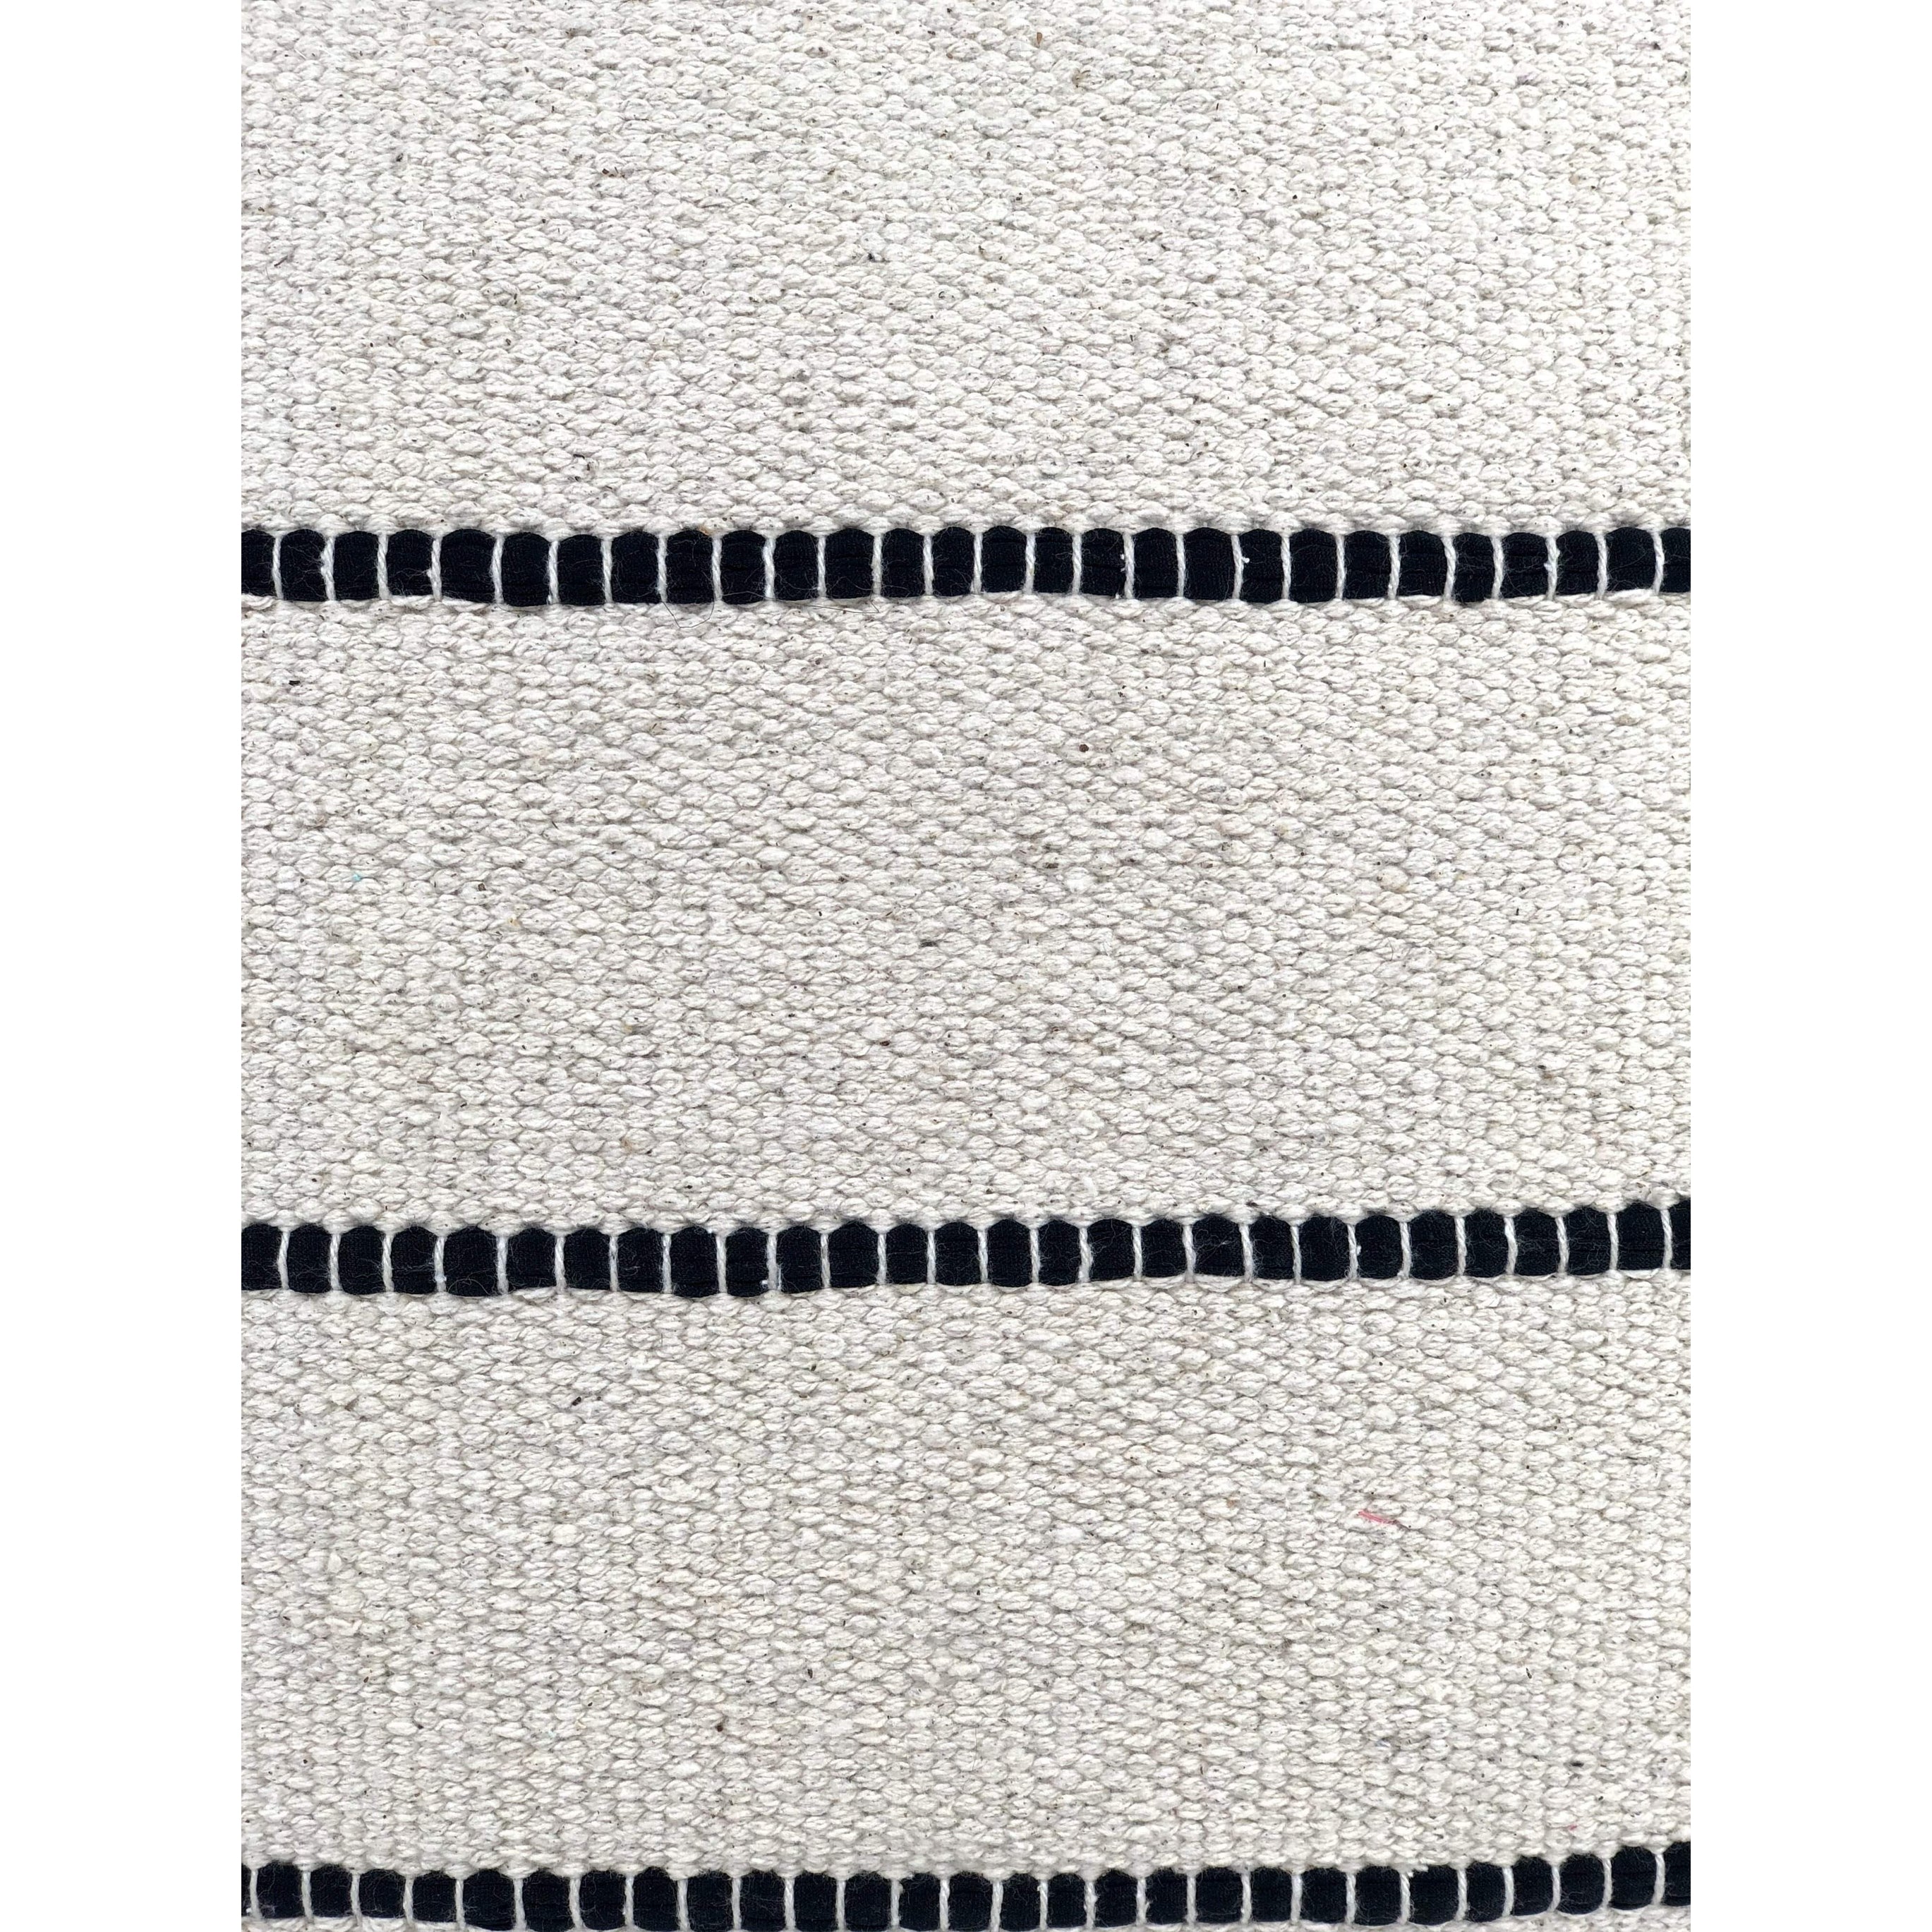 Ivory & Black Stitched Stripe Pillow -20x20